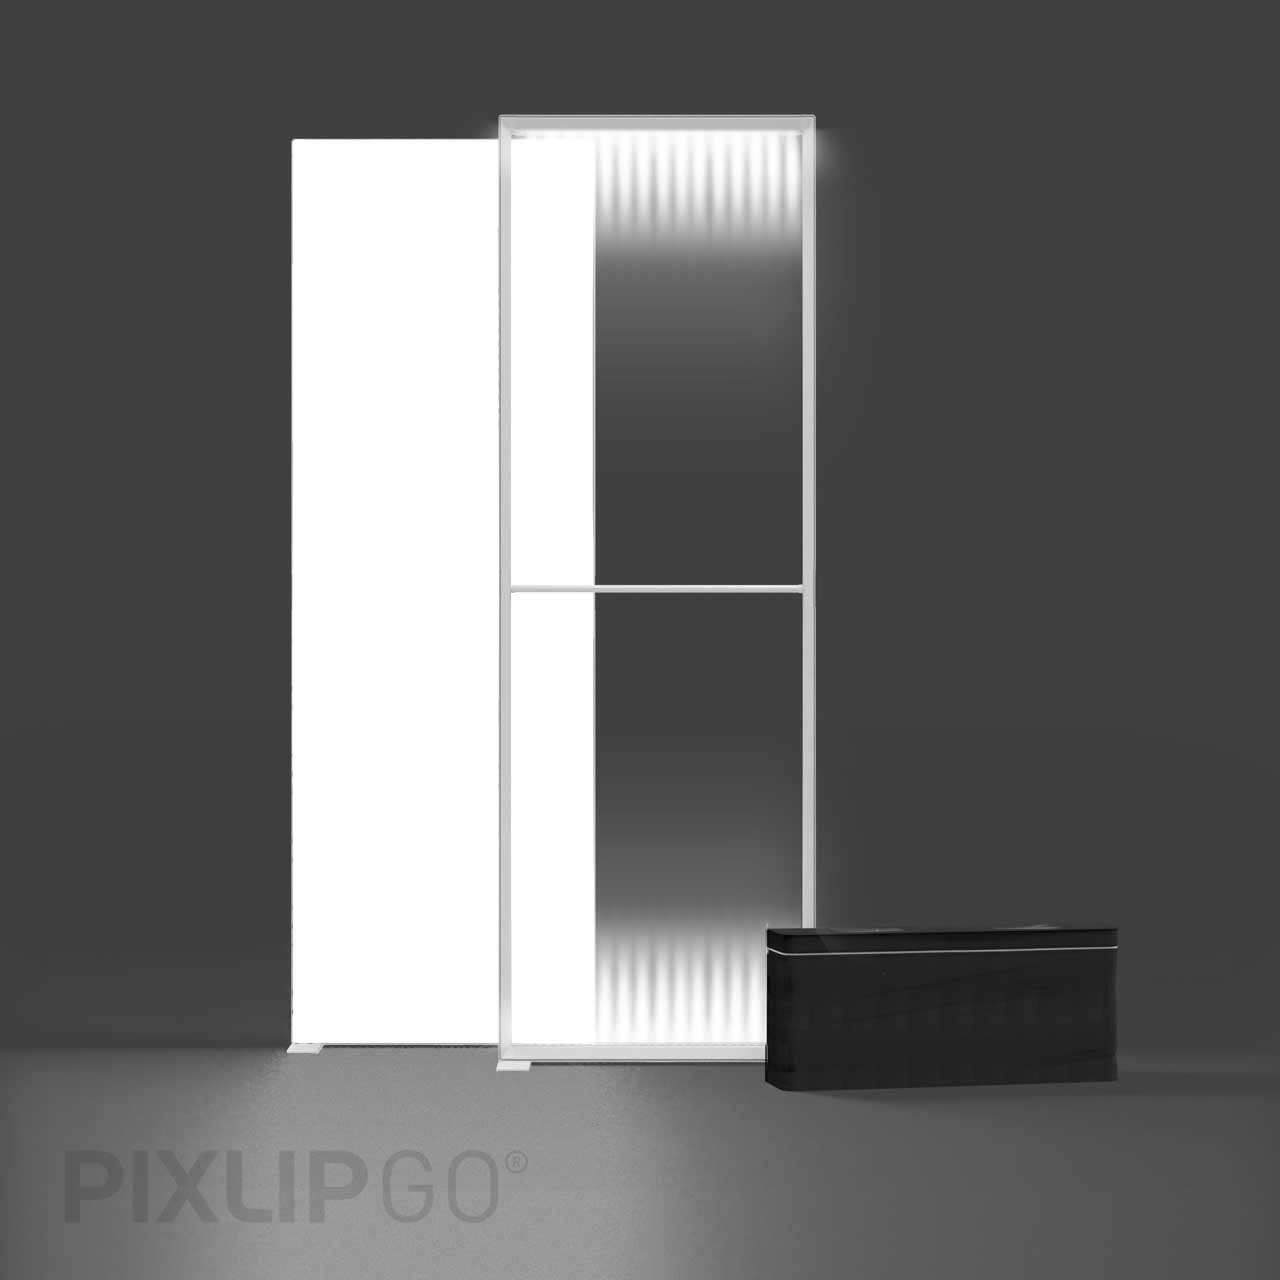 PIXLIP GO Lightbox Set 100 x 250 cm